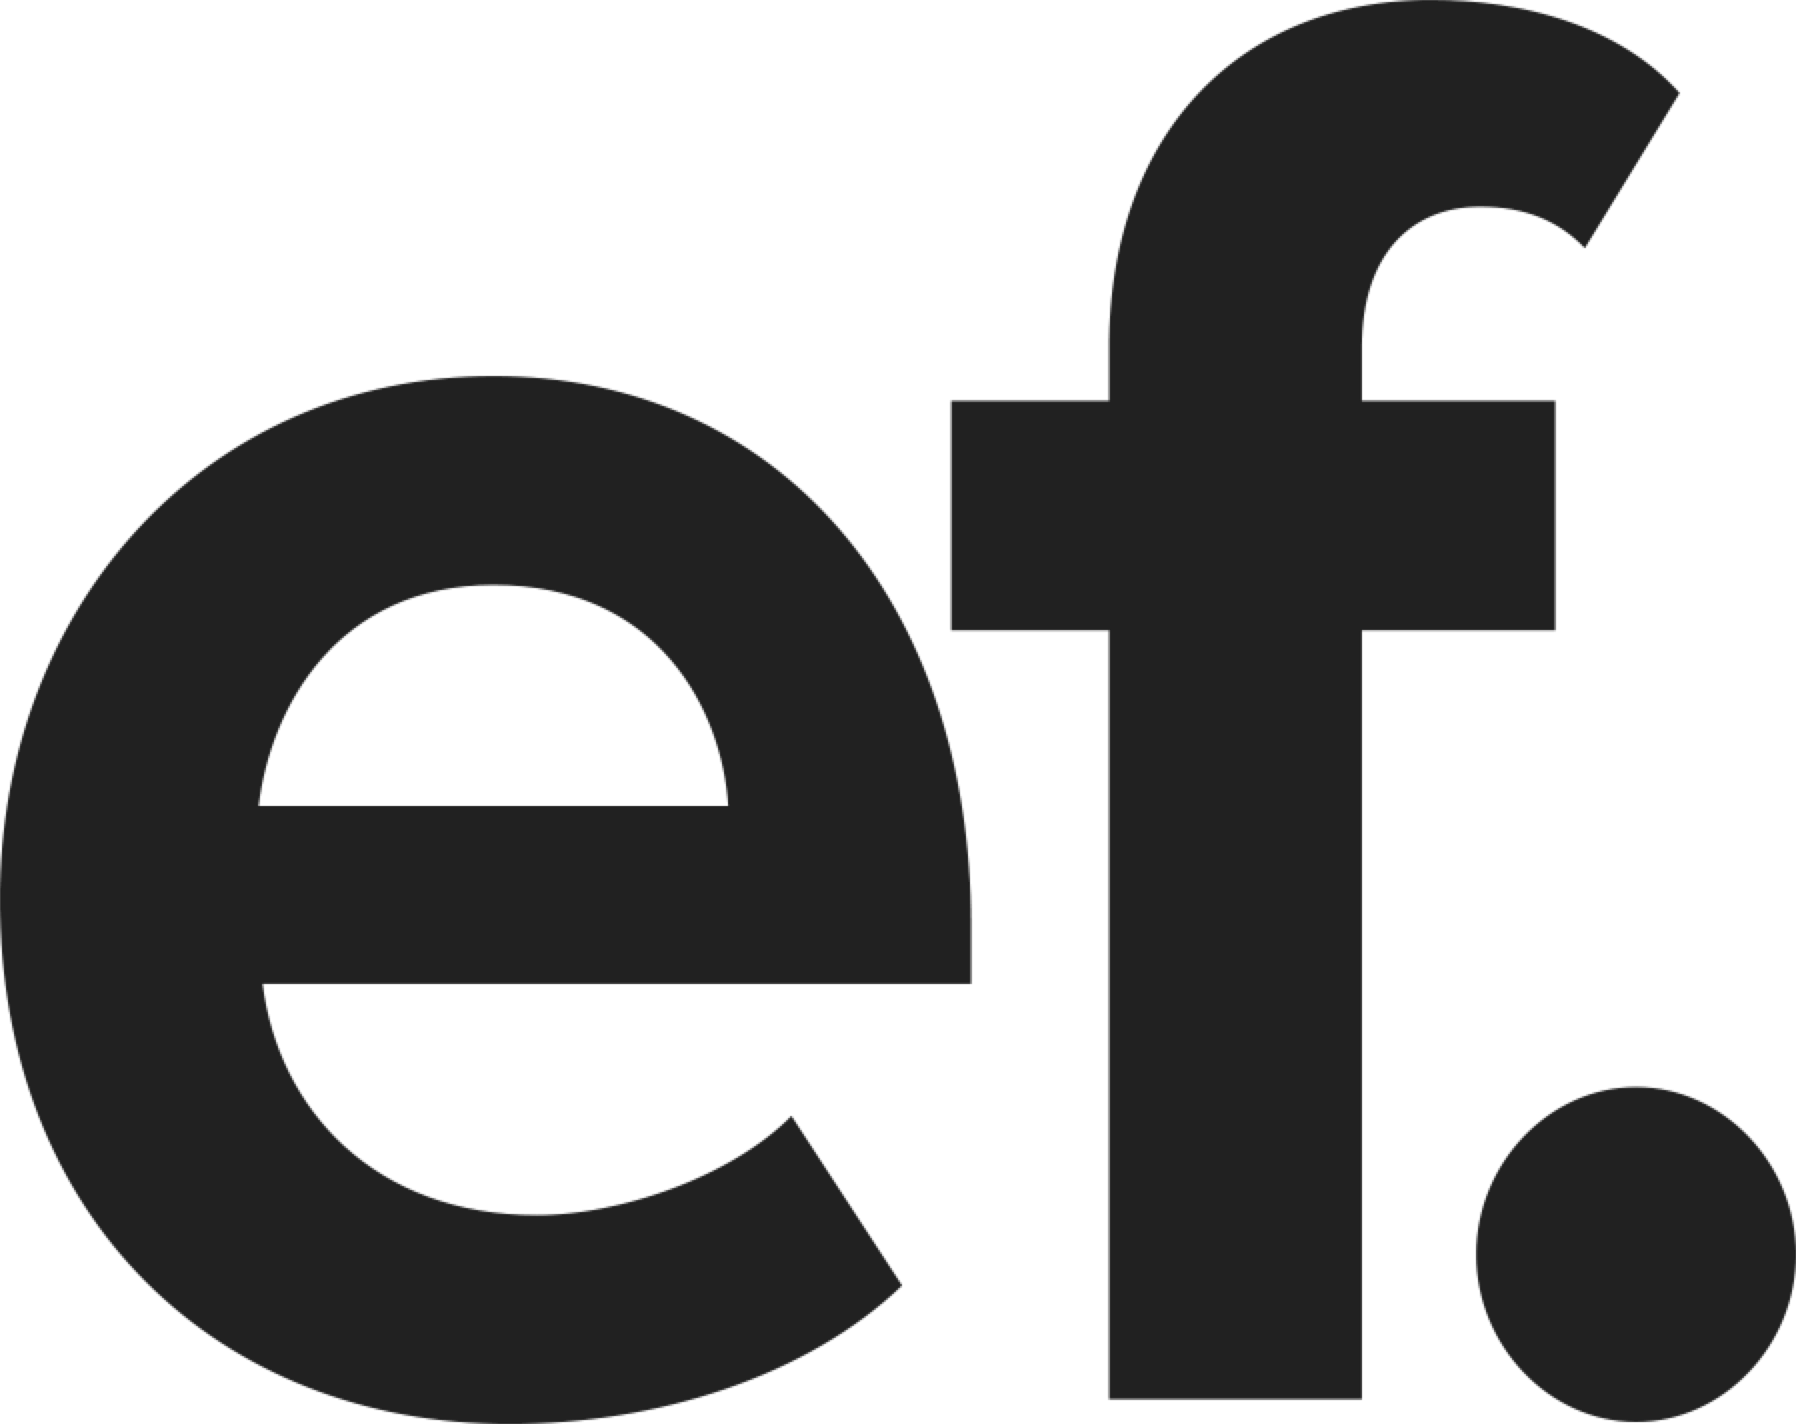 Entrepreneur First logo